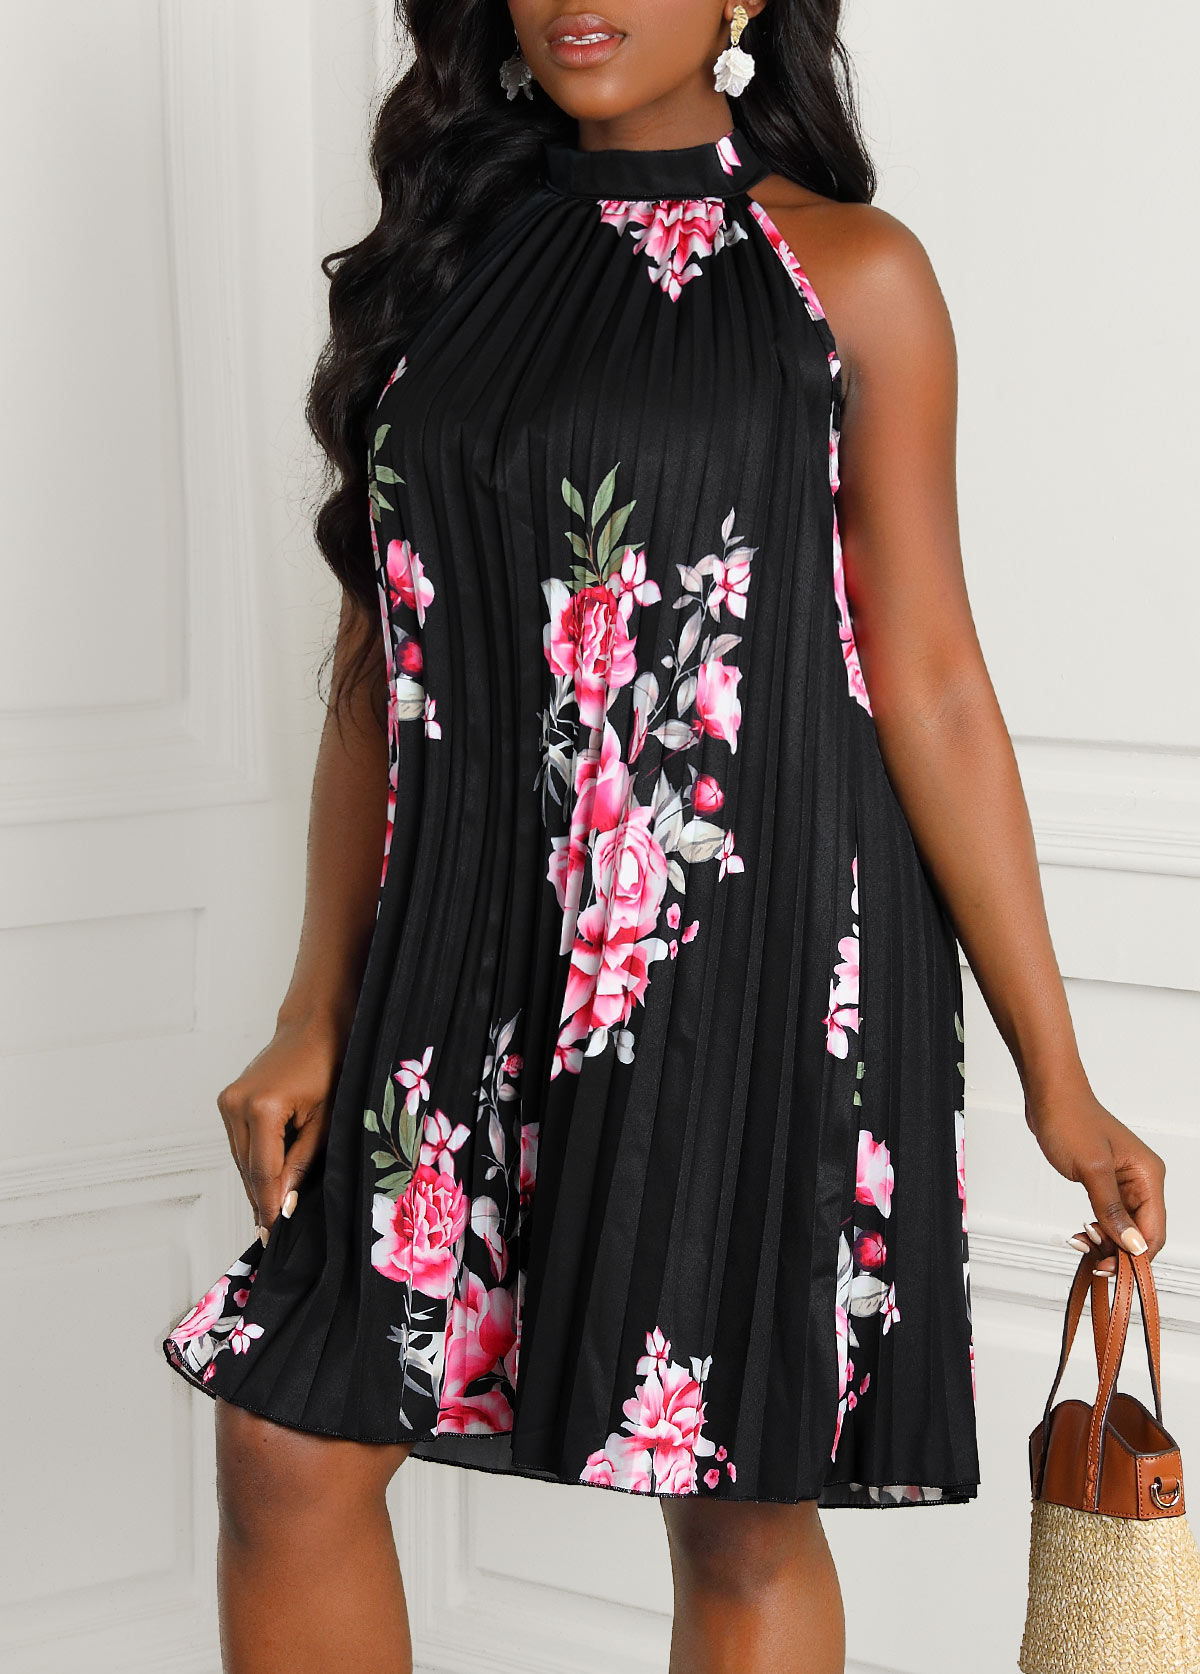 Floral Print Bib Neck Black Sleeveless Dress